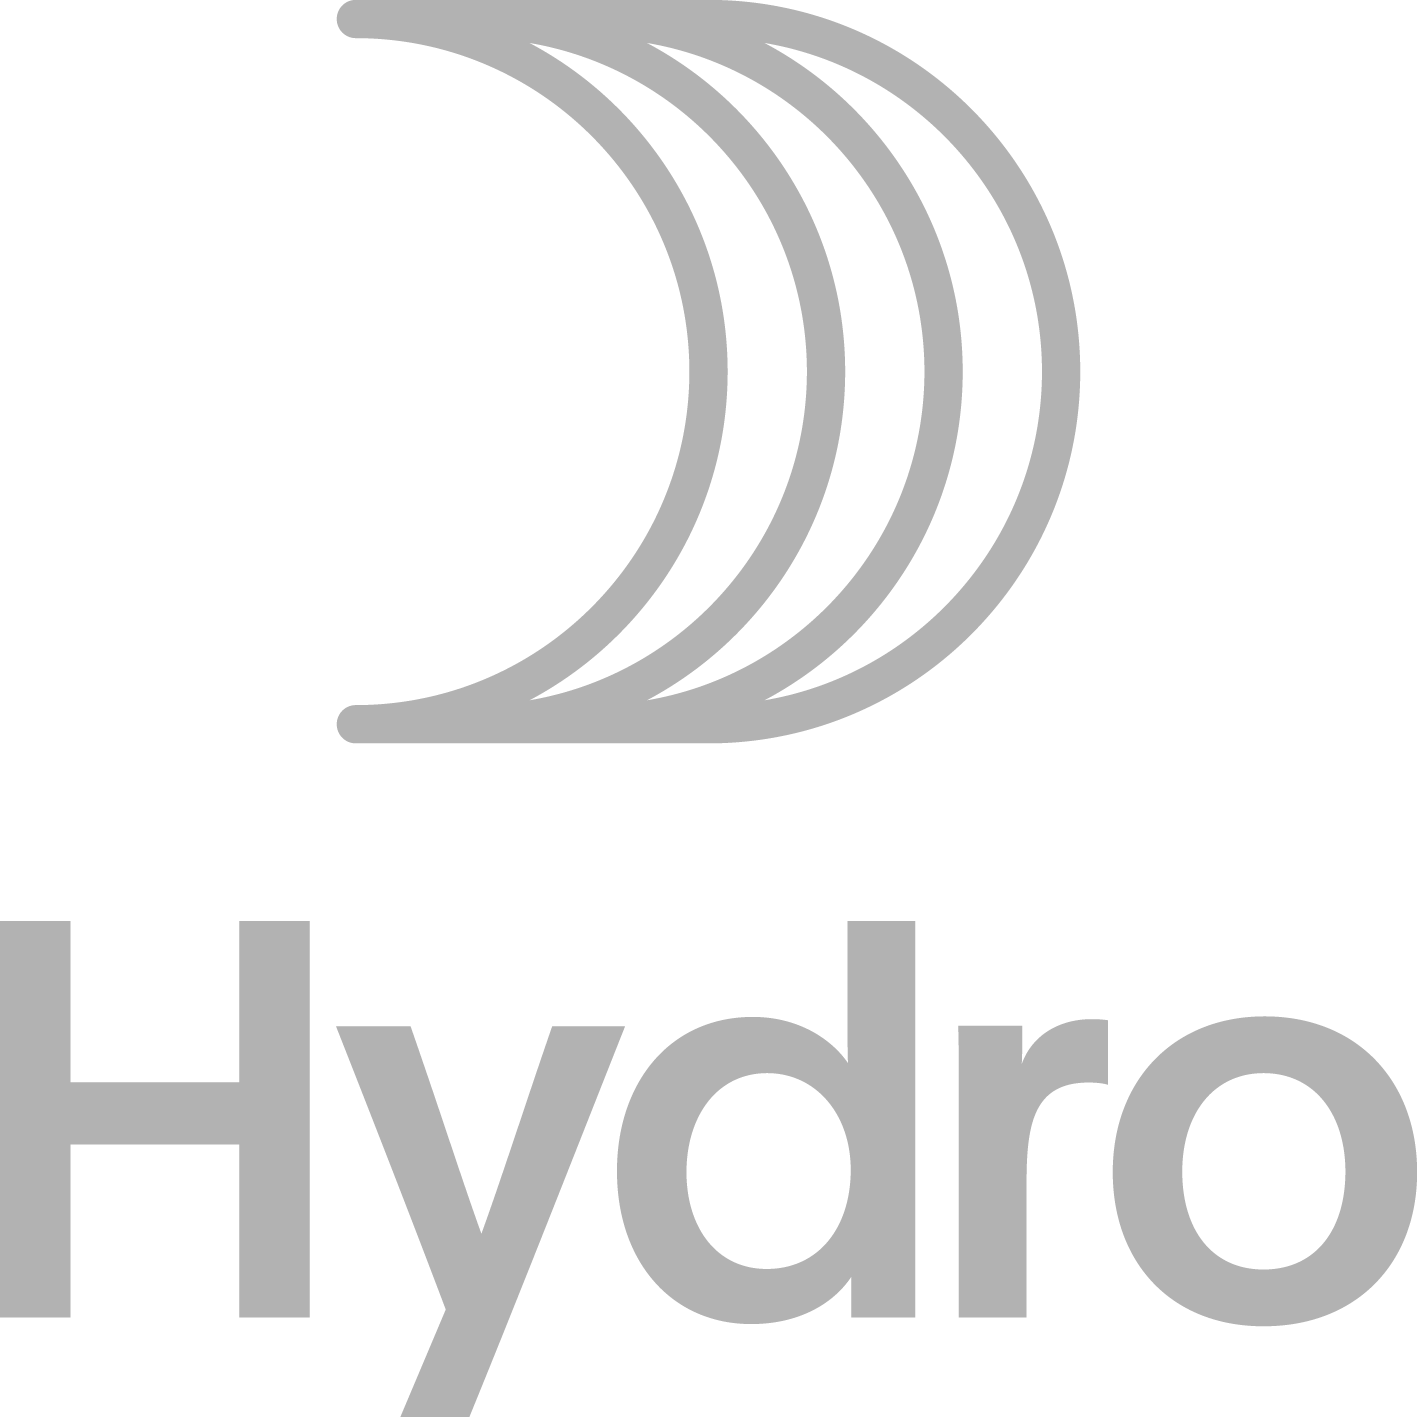 Hydro New Horizon Urban Mining Collective